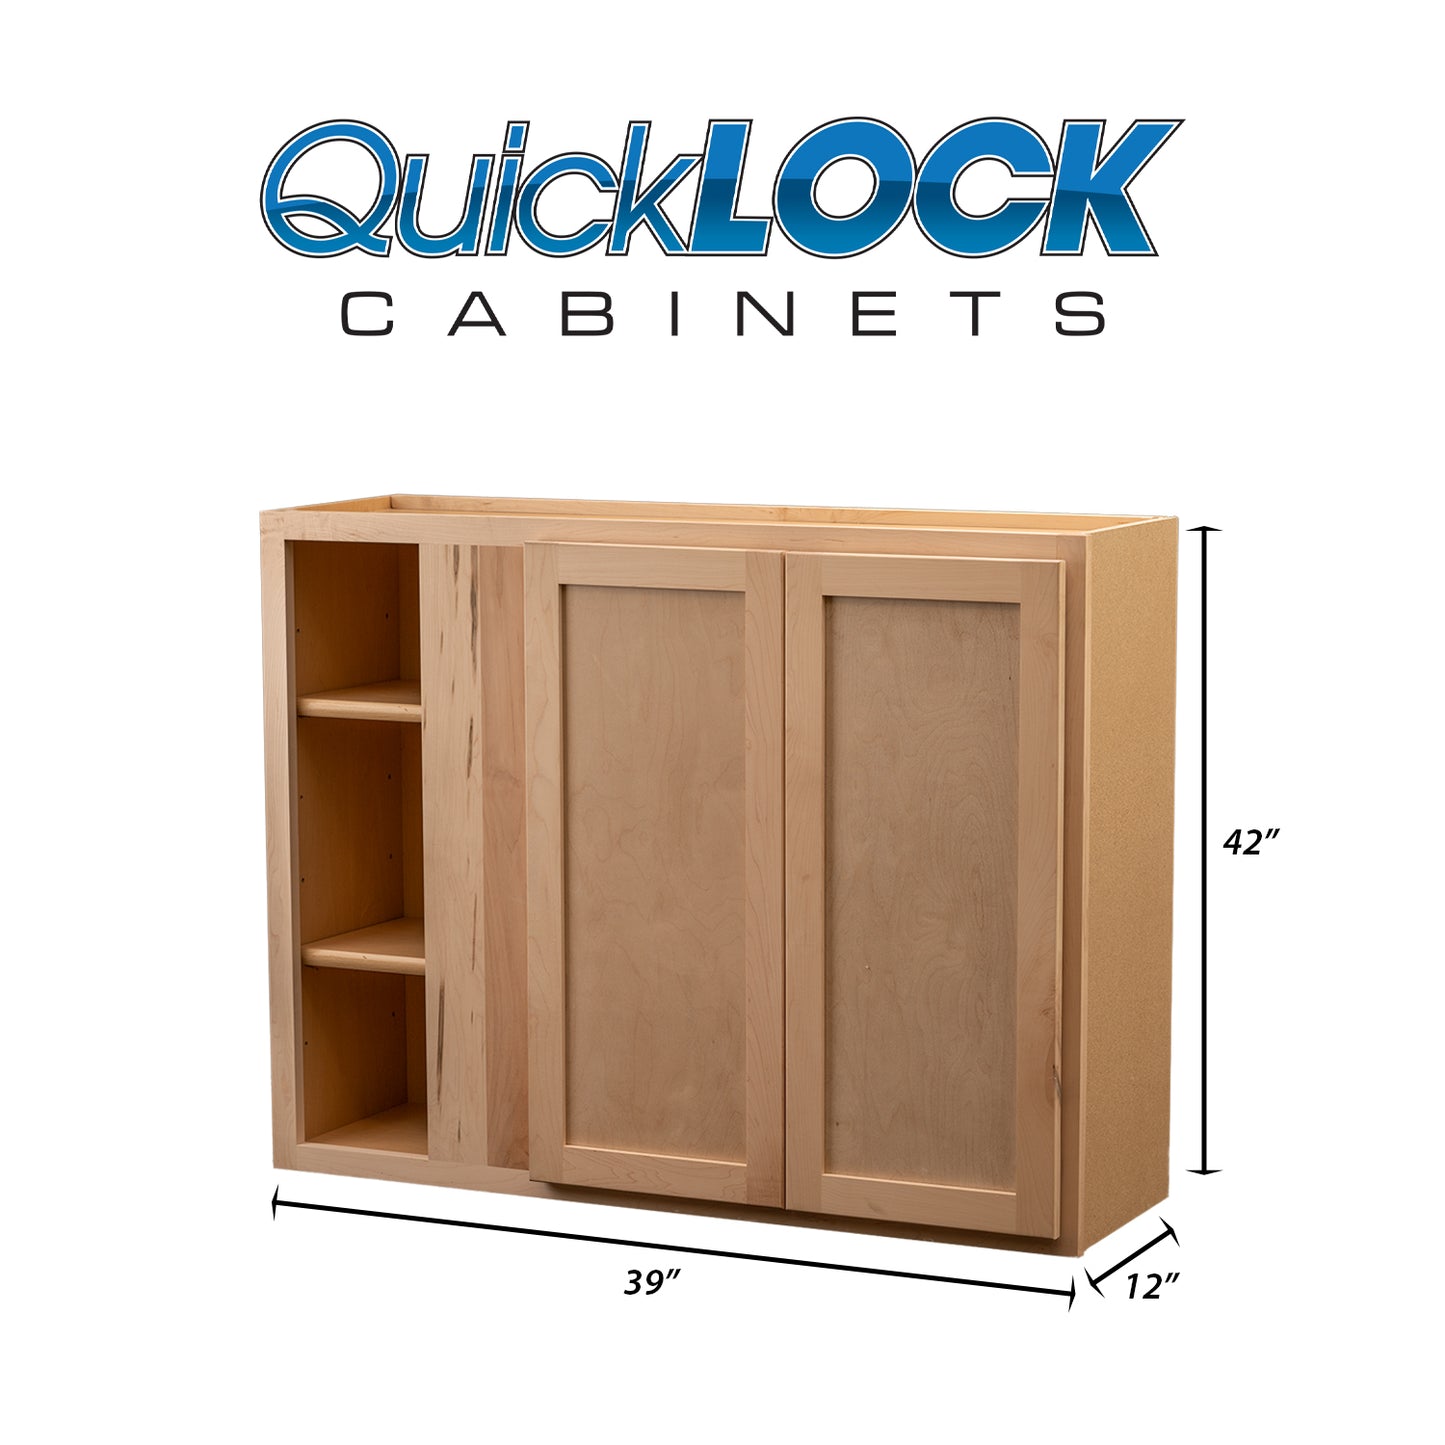 Quicklock RTA (Ready-to-Assemble) Raw Maple 39"Wx42"Hx12"D Blind Corner Wall Cabinet